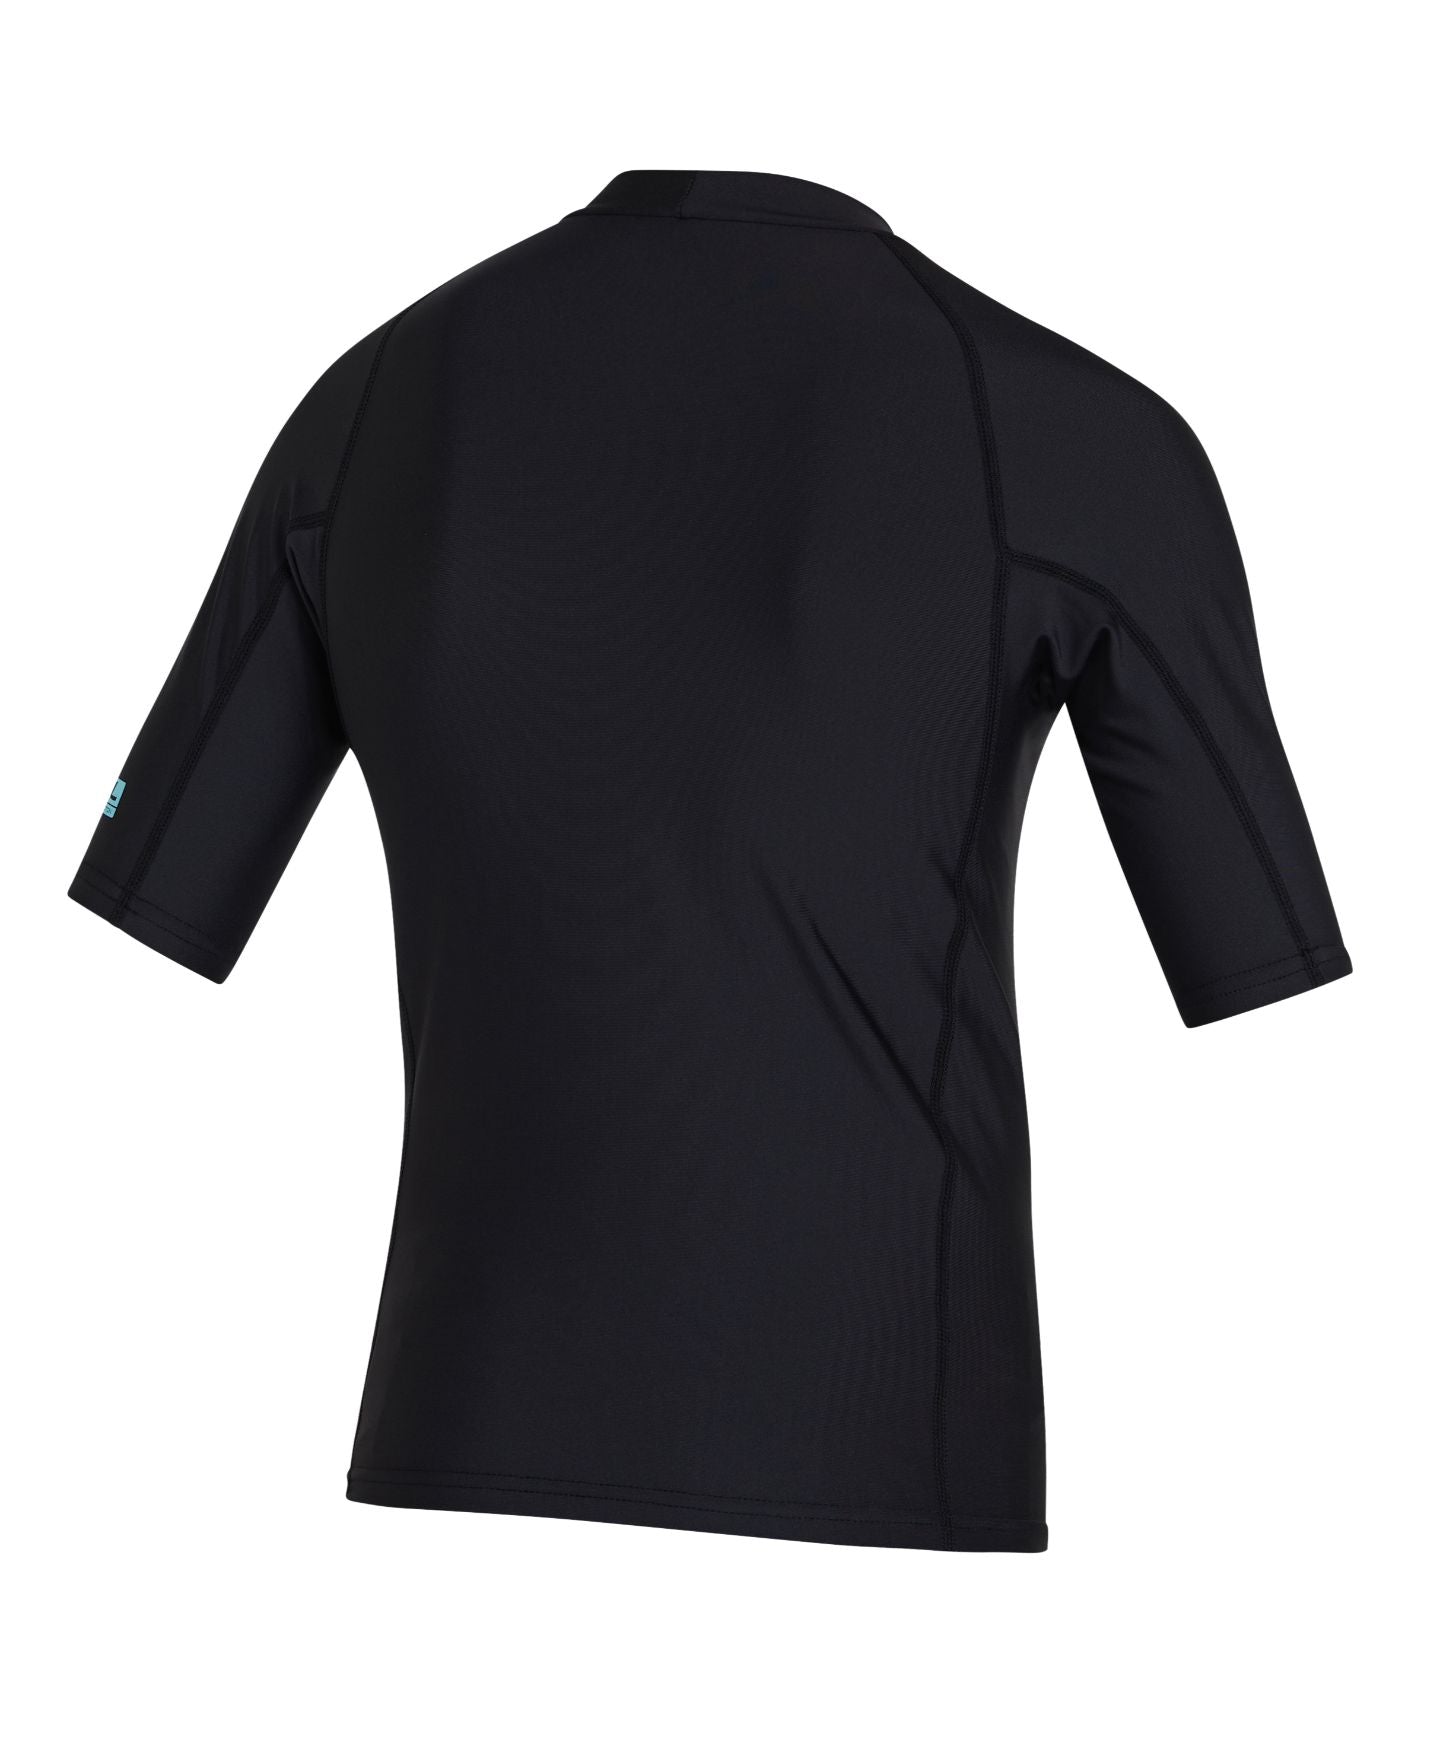 Kid's Reactor UV Short Sleeve Rash Vest - Black